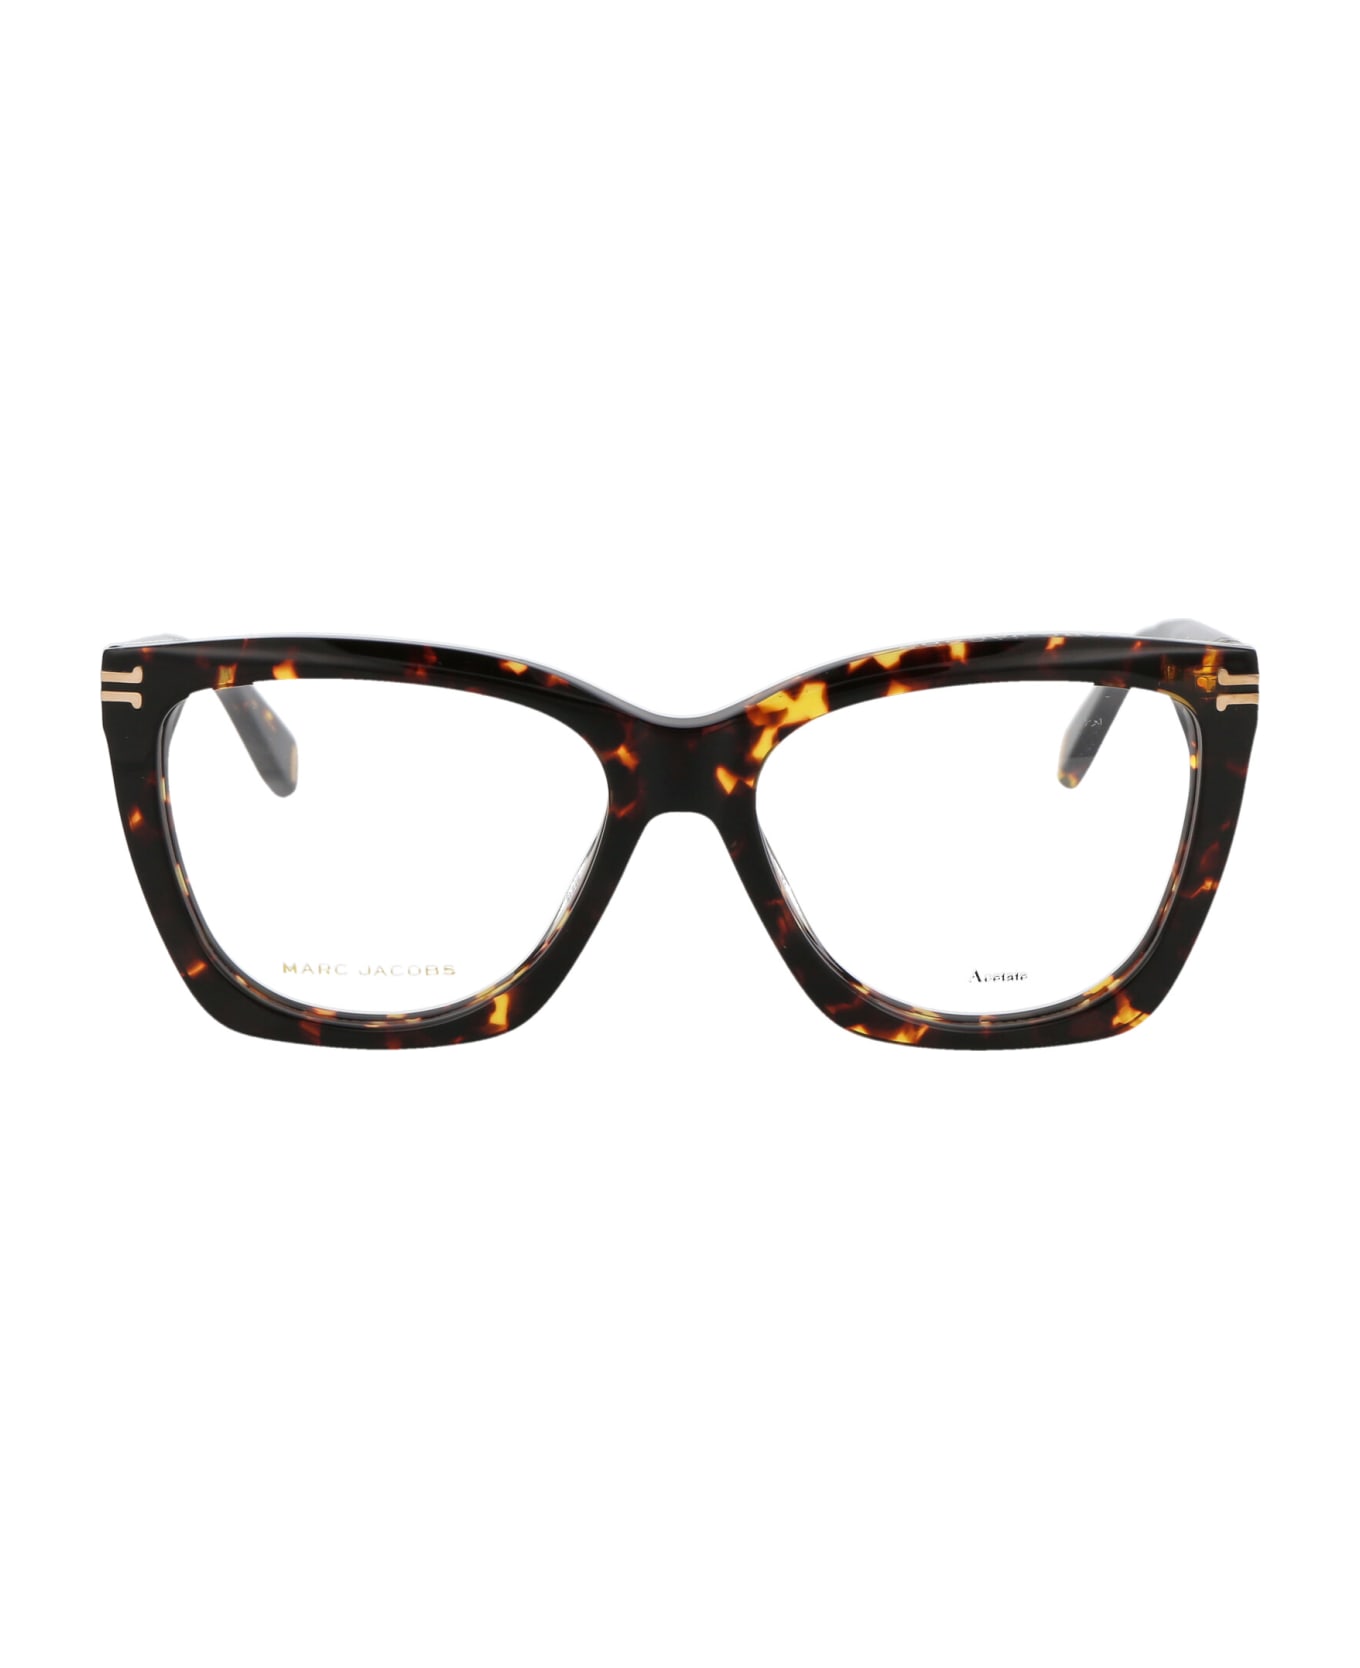 Marc Jacobs Eyewear Mj 1014 Glasses - 086 HAVANA